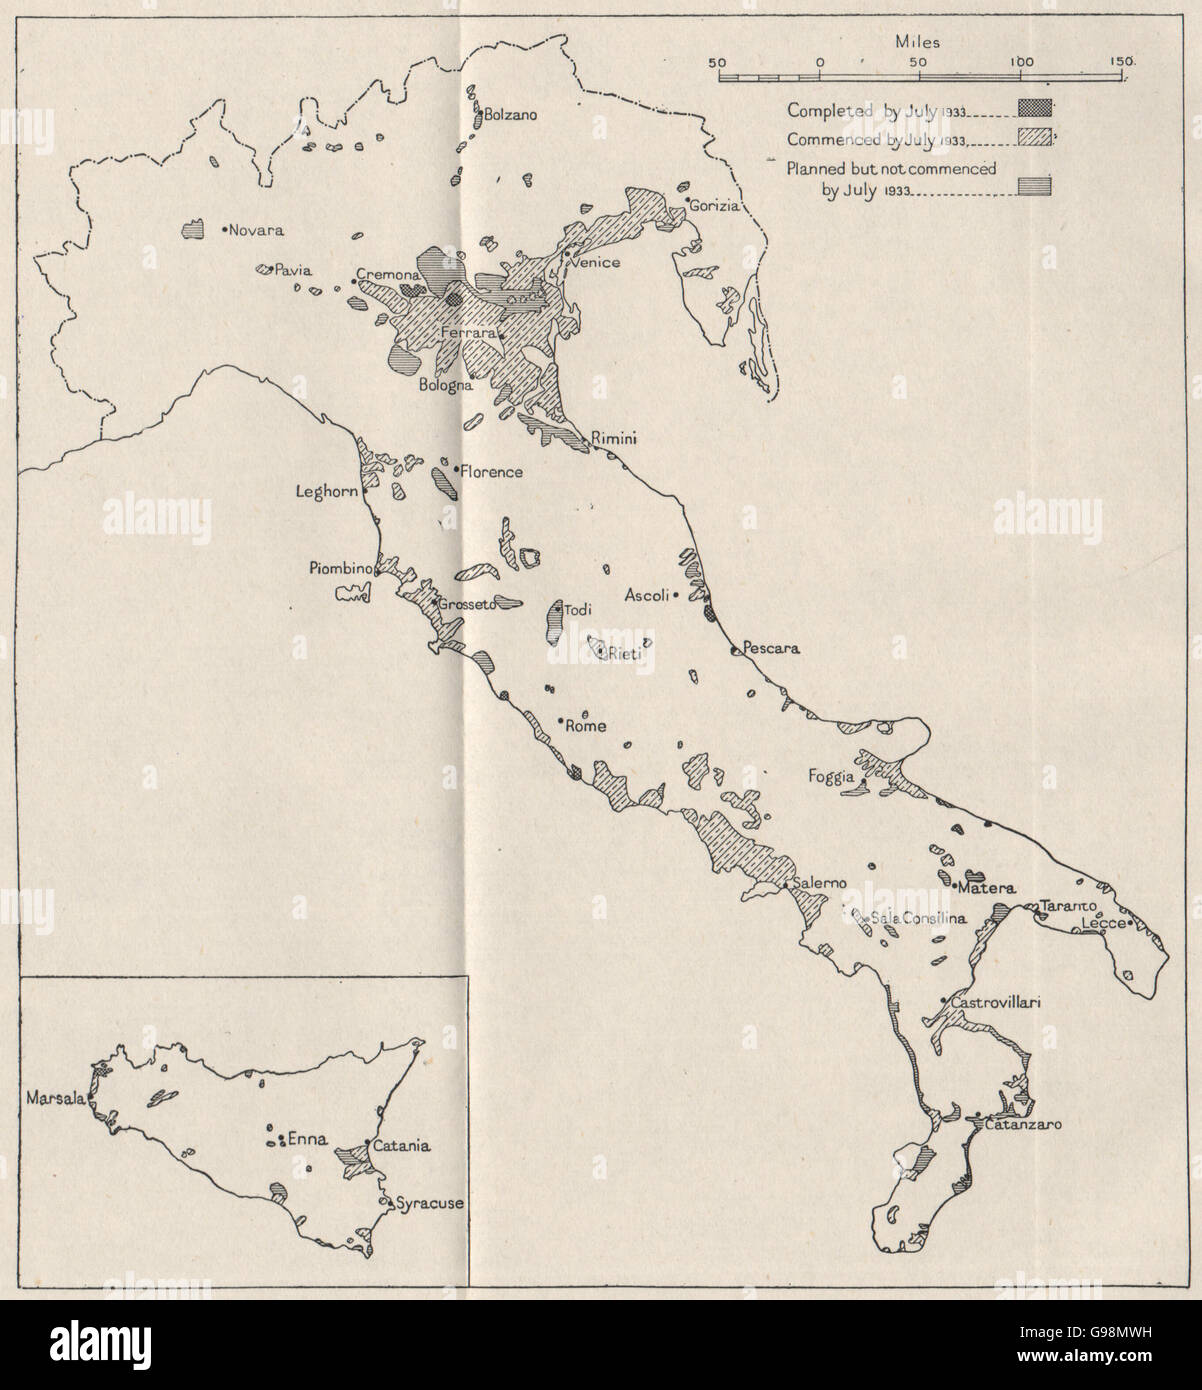 ITALY: Land reclamation schemes, 1933. WW2 ROYAL NAVY INTELLIGENCE MAP, 1945 Stock Photo